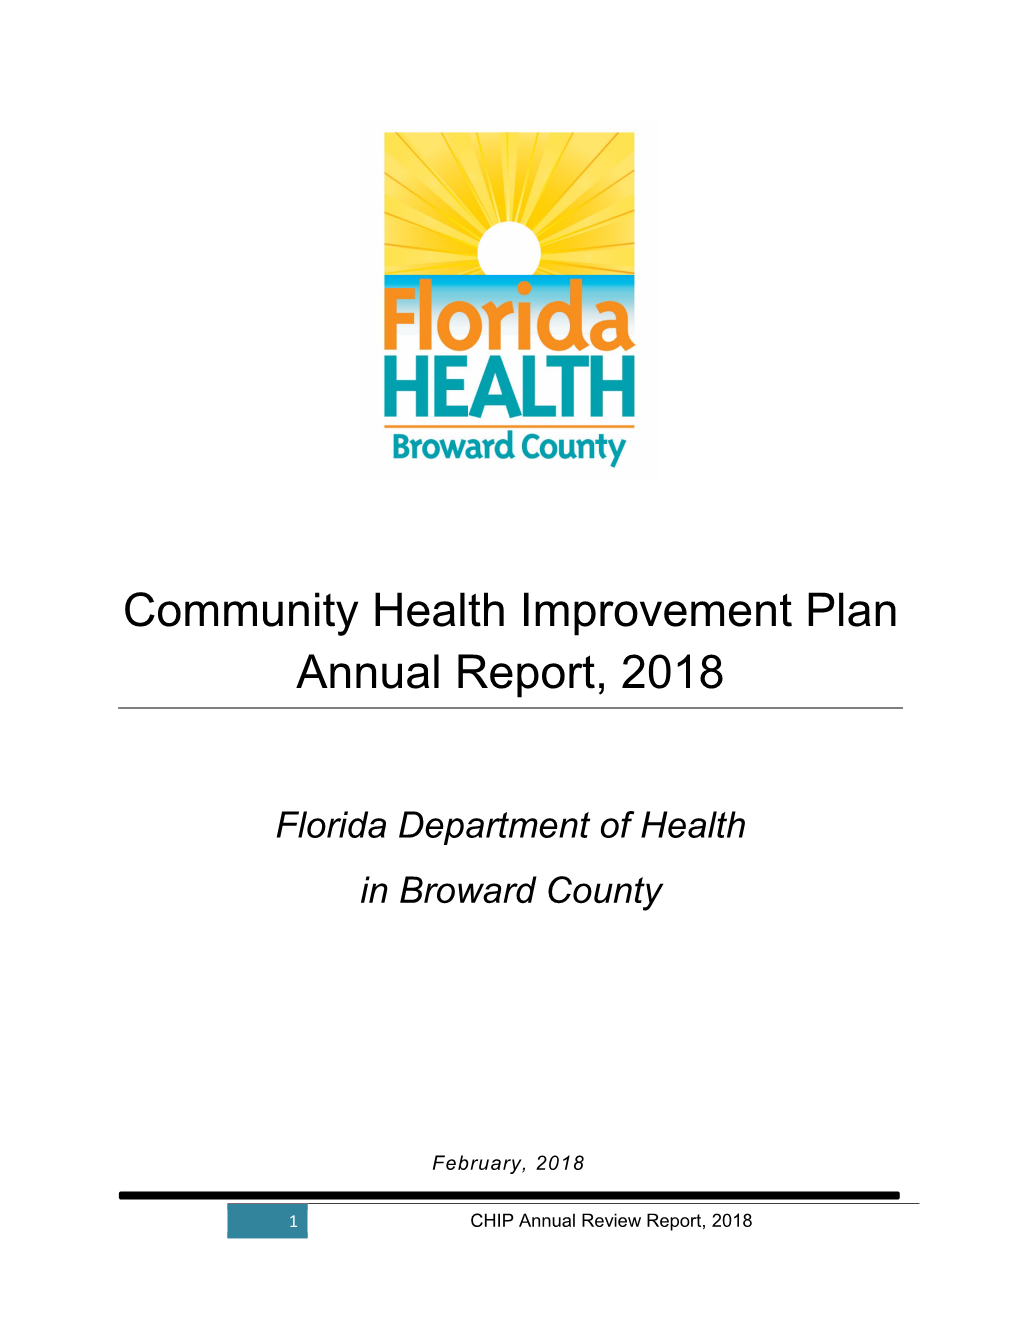 Florida HEALTH Broward County